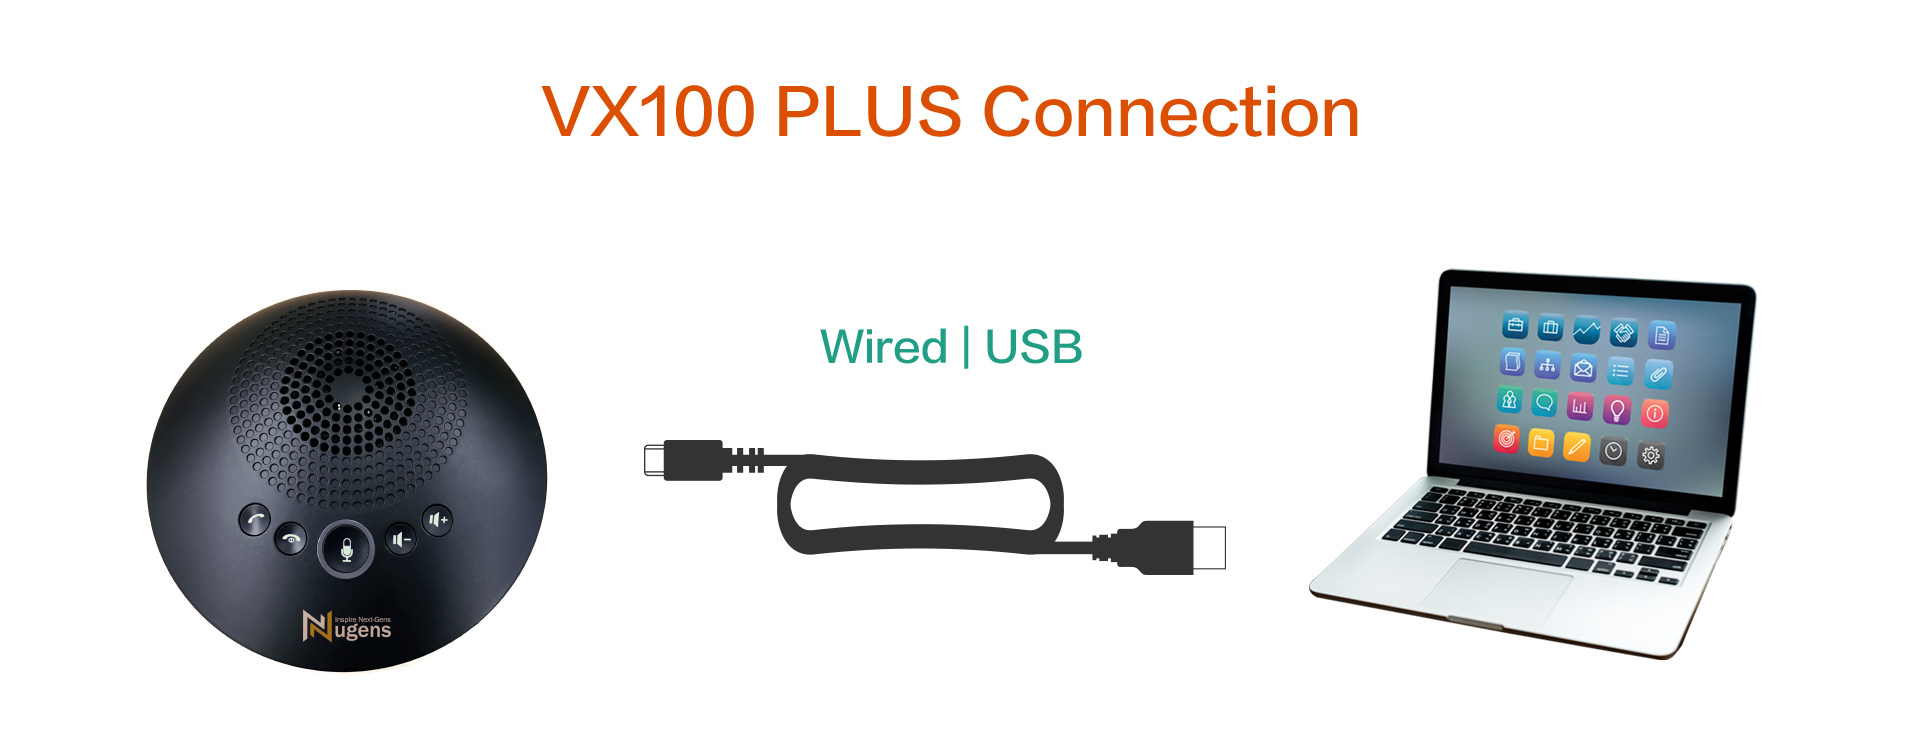 vx100 plus Connection:Wireless | USB